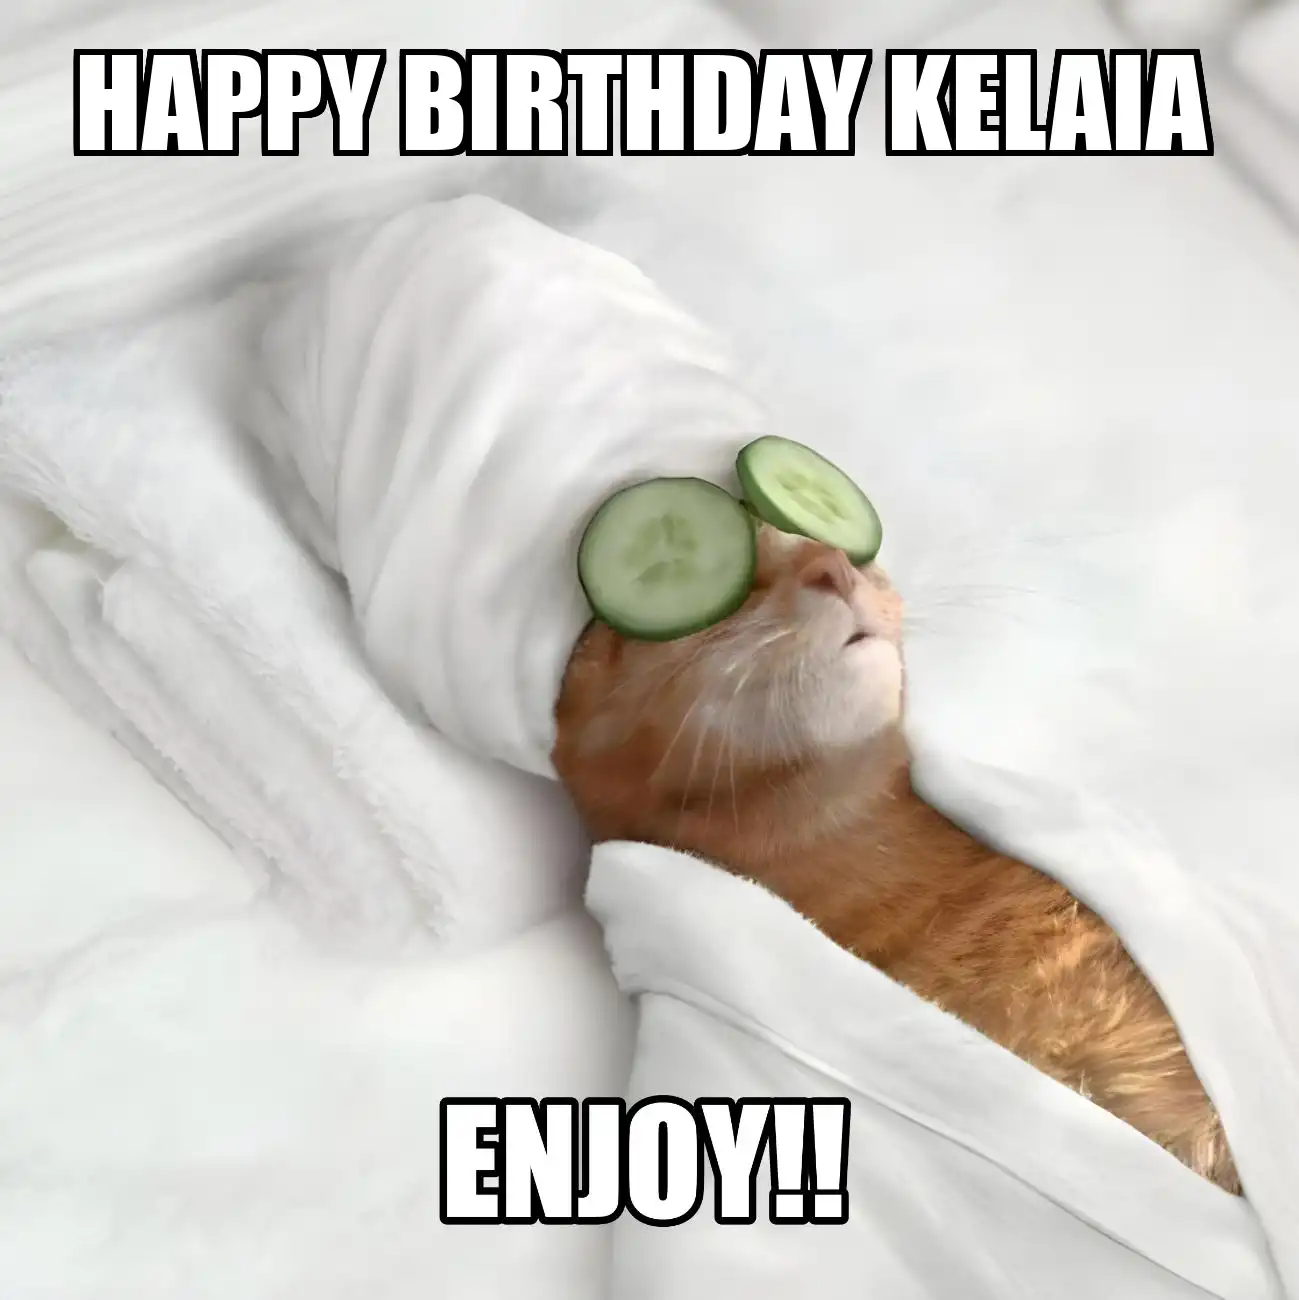 Happy Birthday Kelaia Enjoy Cat Meme